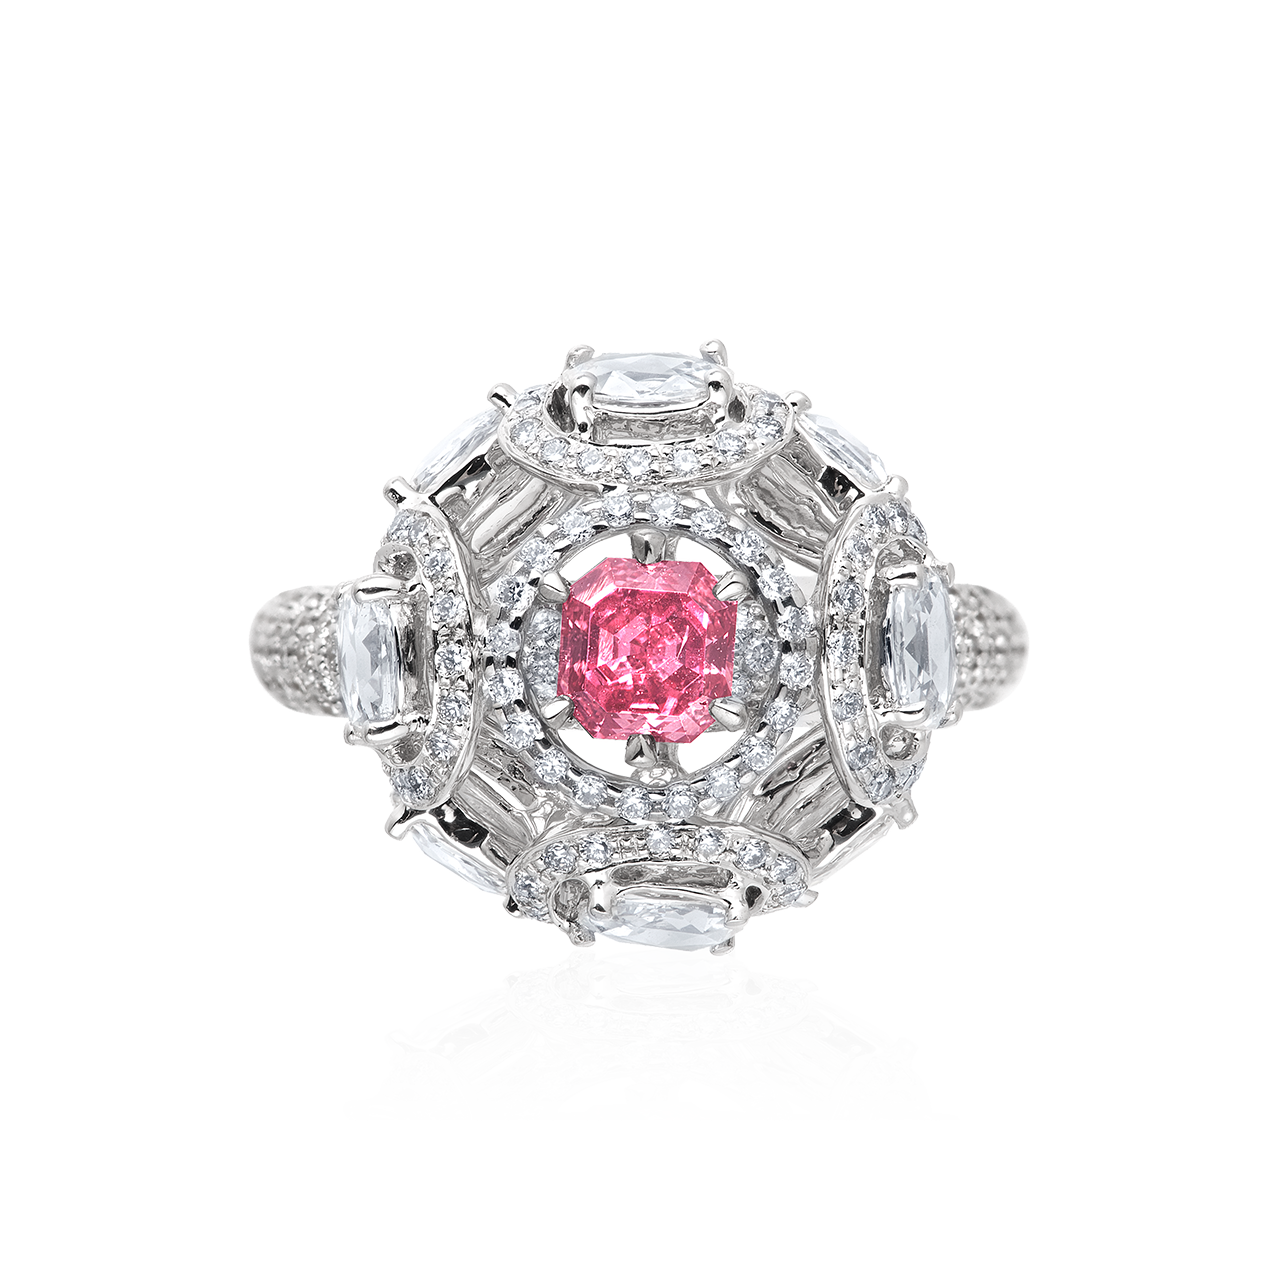 阿蓋爾粉鑽戒 0.44克拉
Pink Diamond from Argyle Mine 
and Diamond Ring